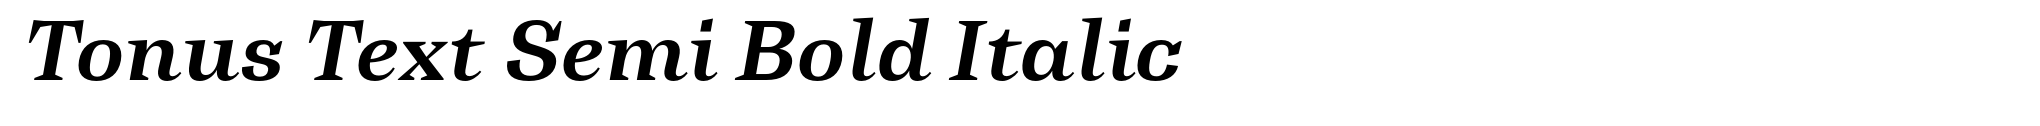 Tonus Text Semi Bold Italic image